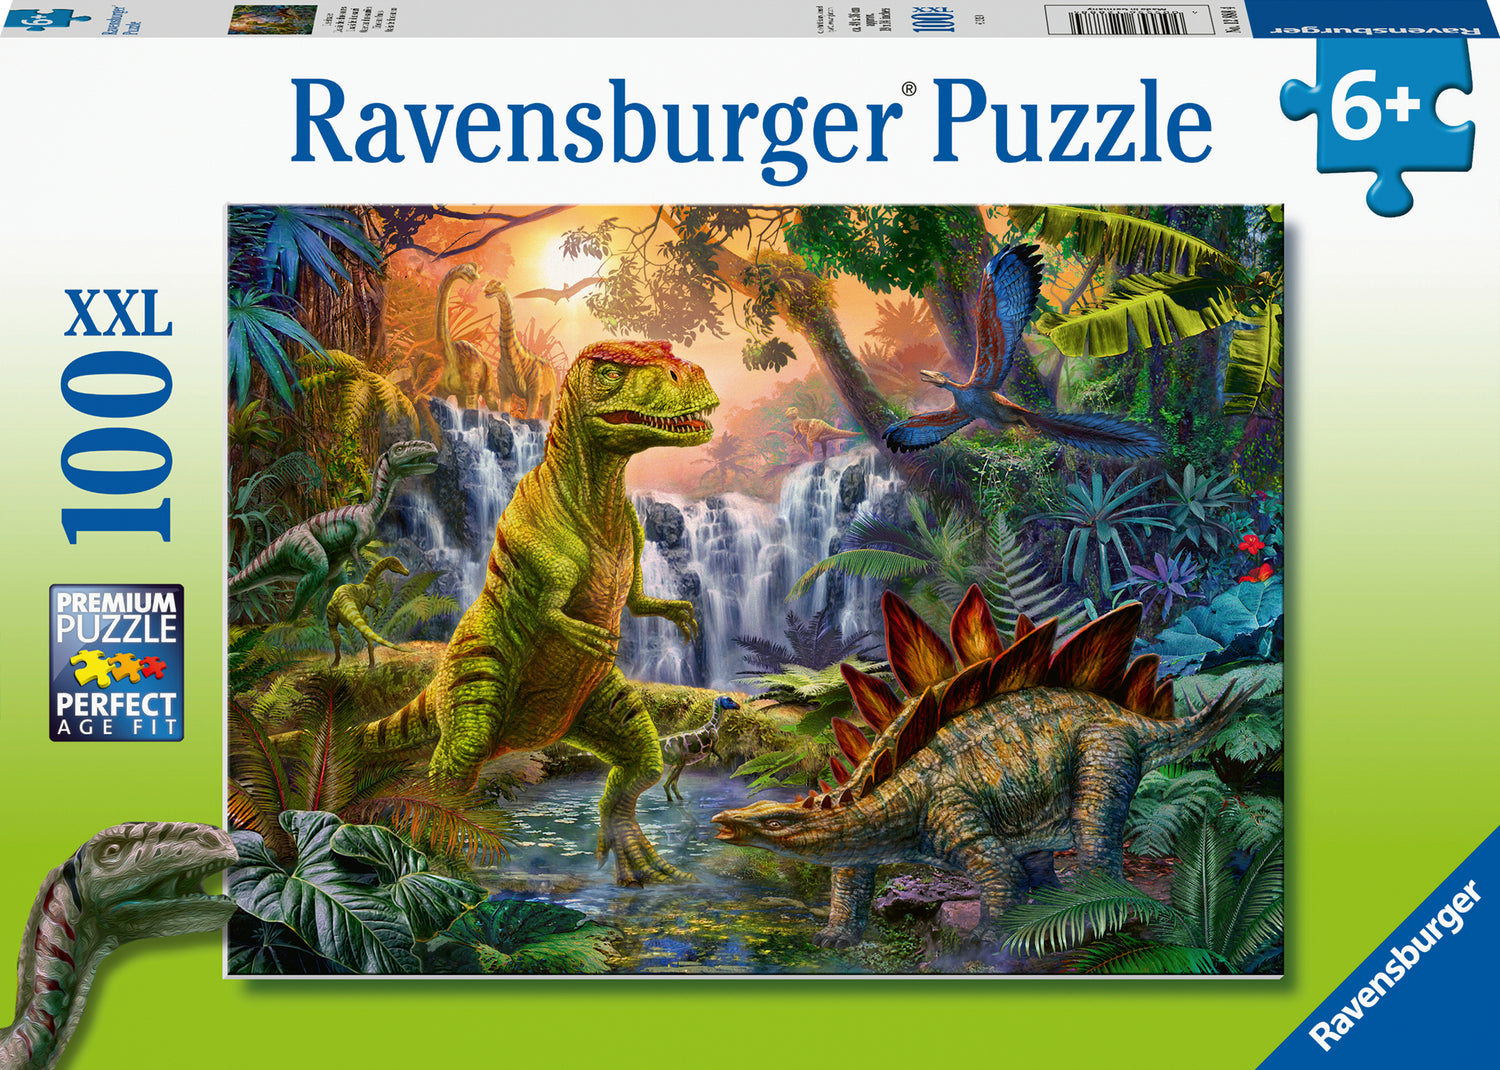 Dinosaur Oasis (100 pc Puzzle)